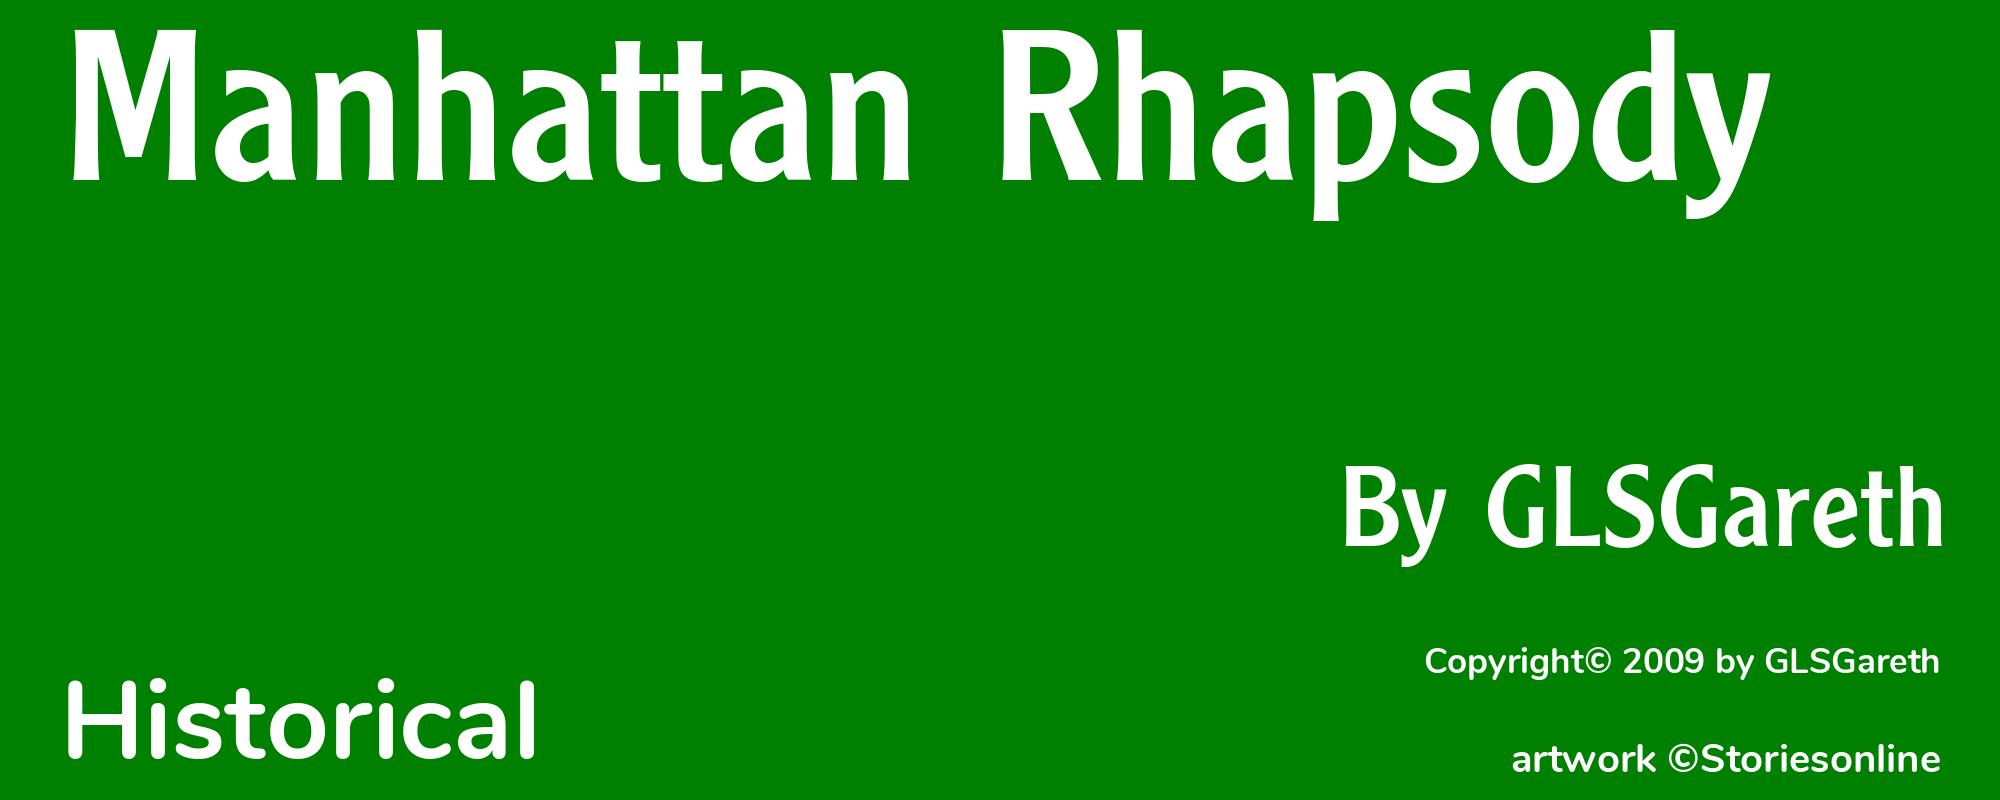 Manhattan Rhapsody - Cover